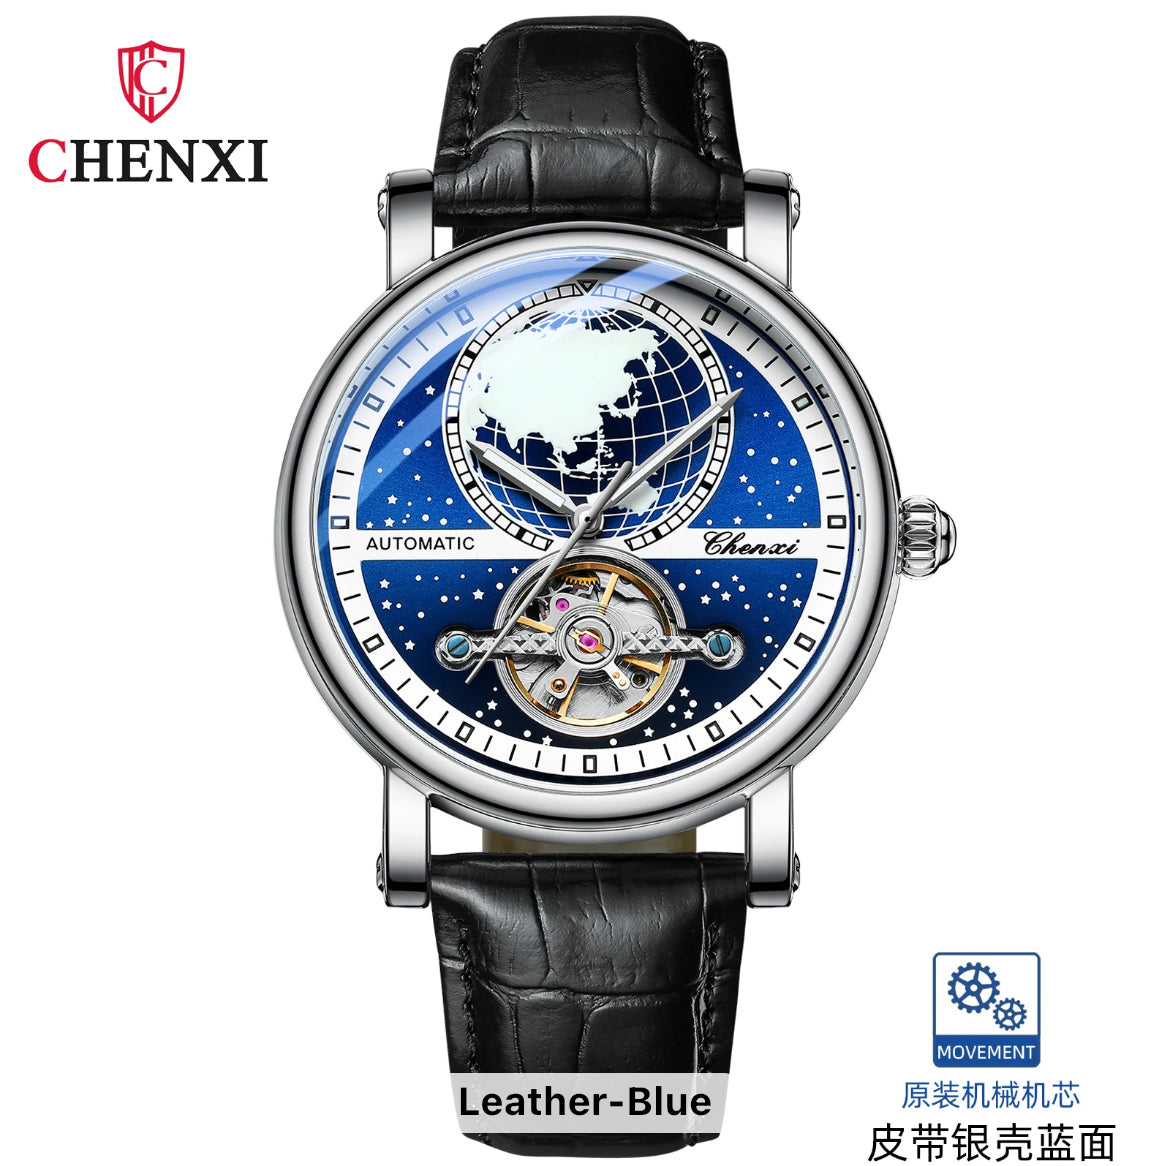 CHENXI 8871 Fashion Hollow Full Automatic Watch
Stainless Steel Waterproof Luminous Tourbillon